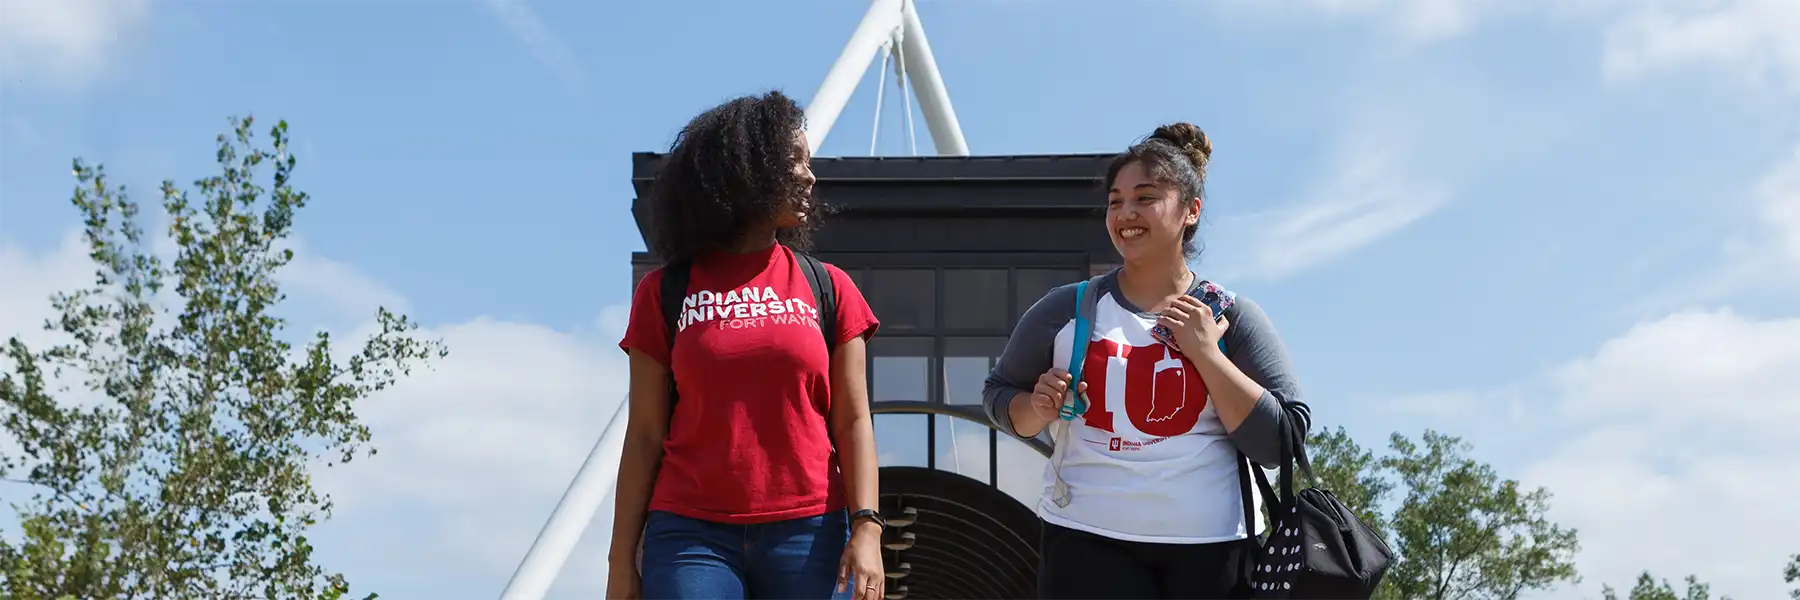 Two IU Fort Wayne students, wearing backpacks and IU shirts, cross a pedestrian bridge while chatting.